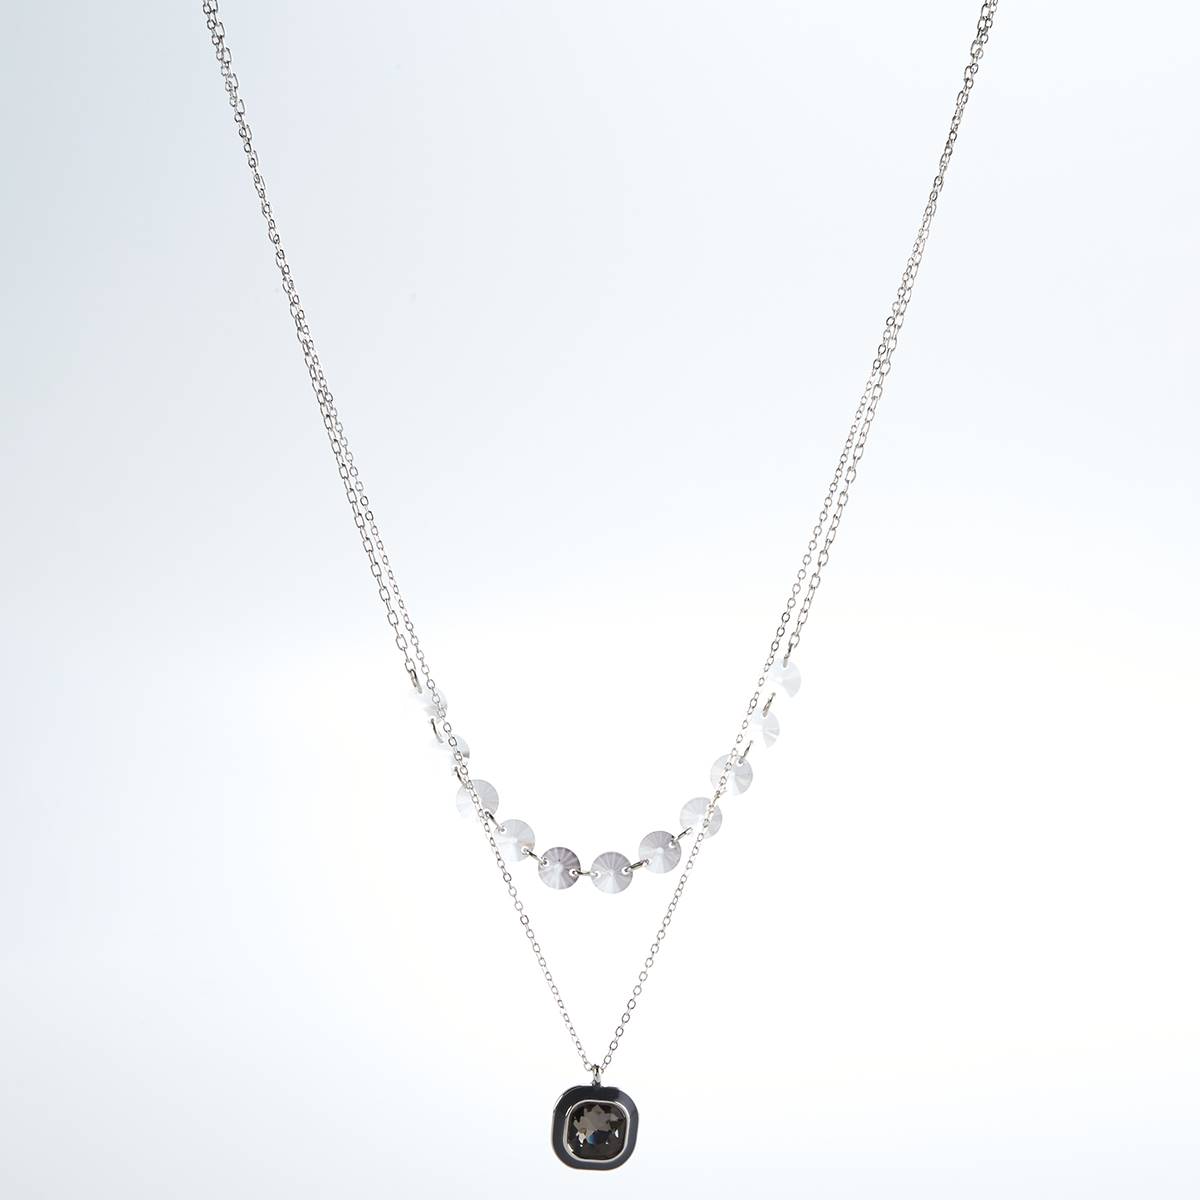 Ashley Cooper(tm) Grey Ombre 2 Row Pendant Necklace